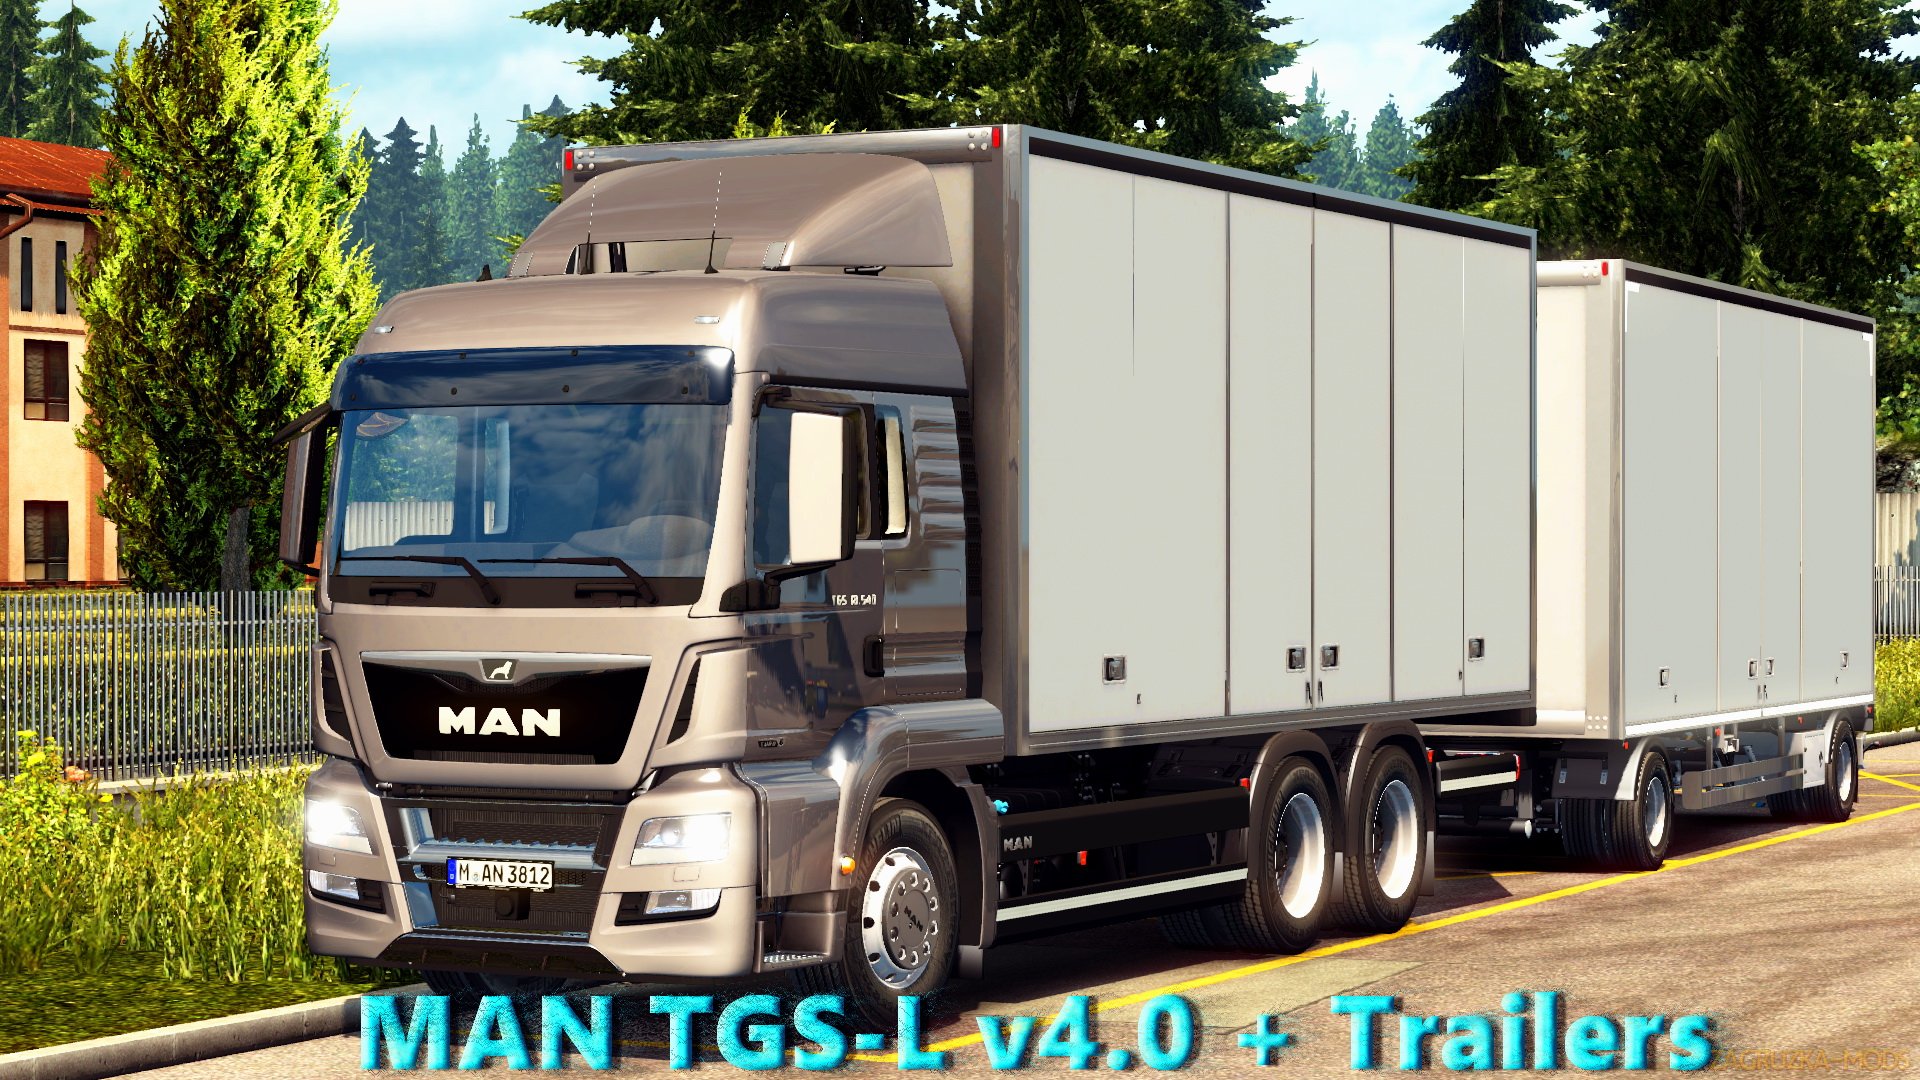 MAN TGS-L v4.0 + Trailers